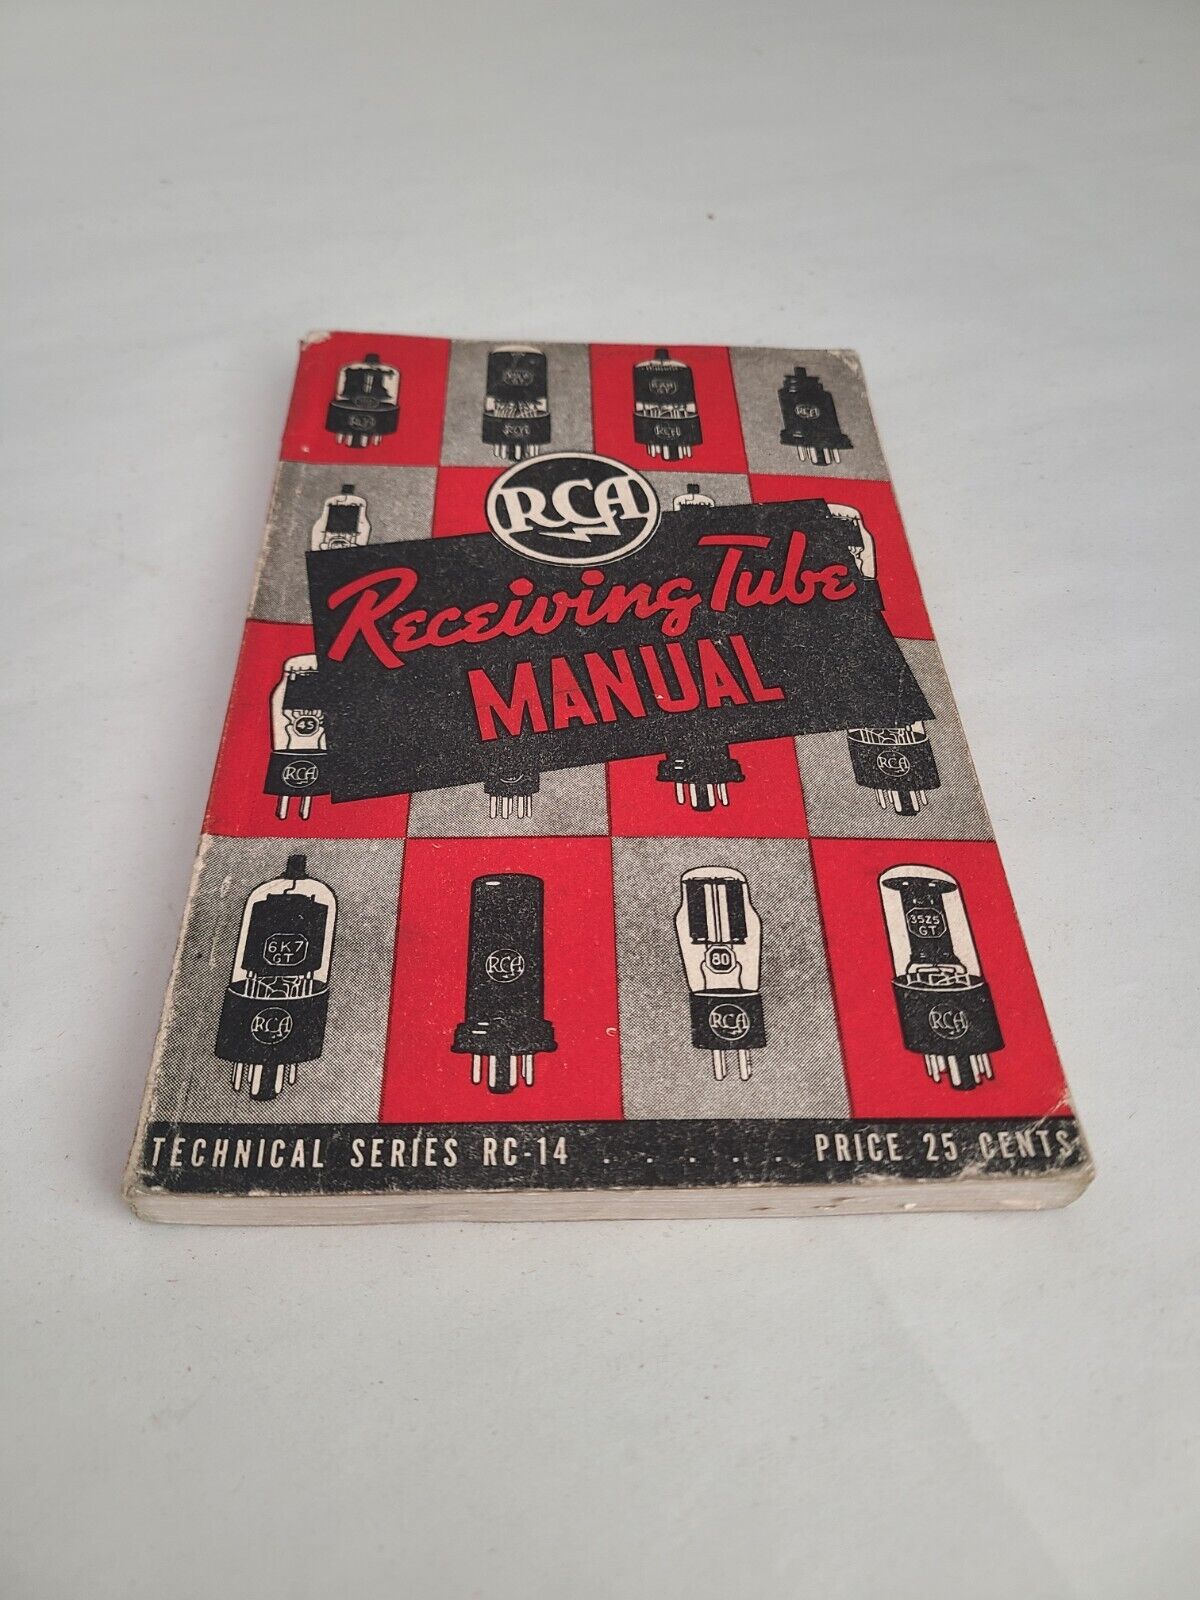 Vintage RCA Receiving Tube Manual: Technical Series RC-14 (1940 SC)